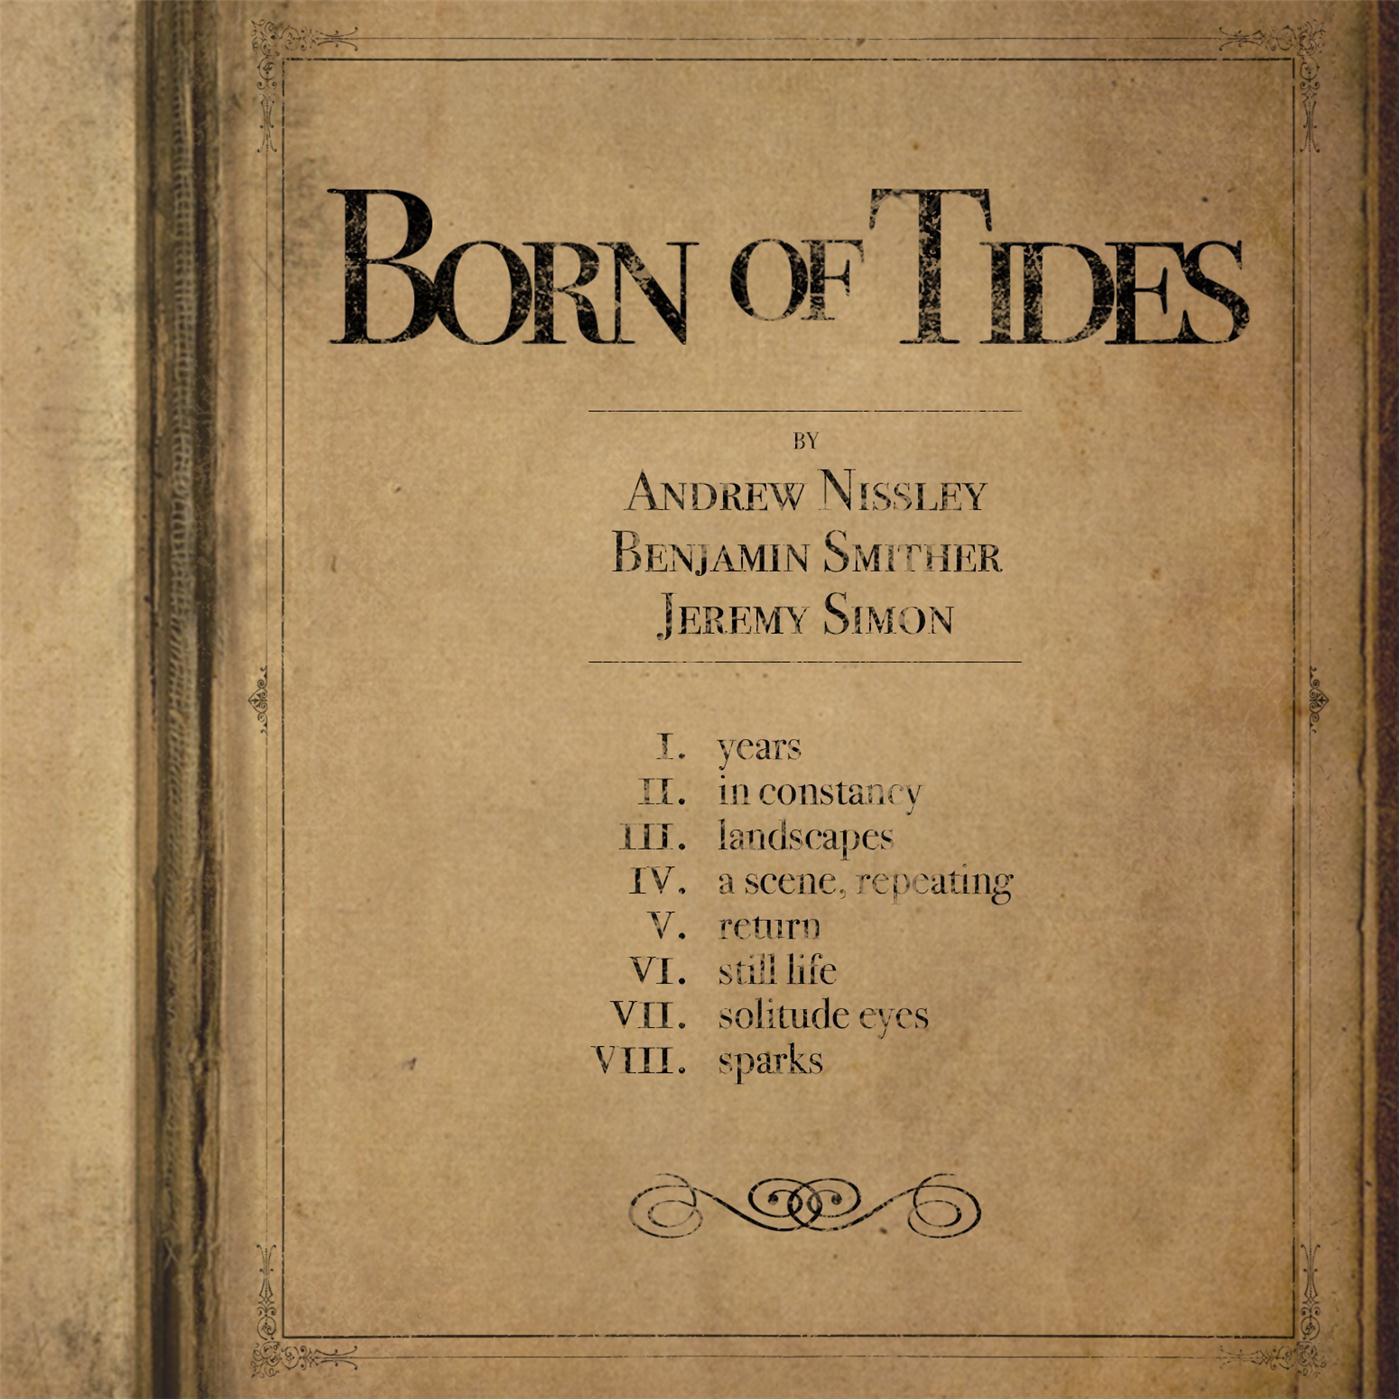 Born of Tides